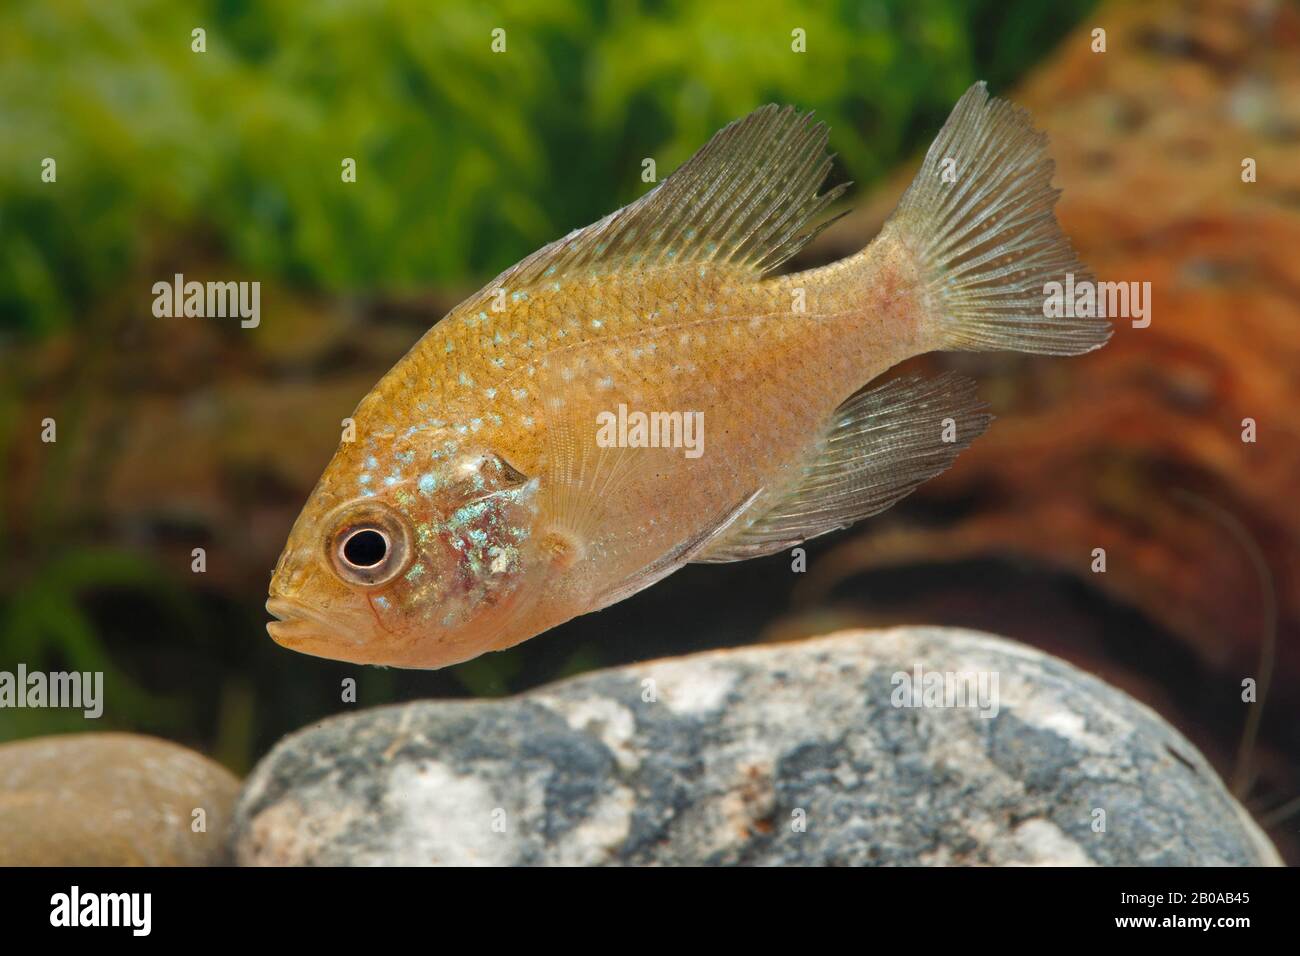 Pesce solare Bluescotted (Enneacanthus gloriosus), vista laterale Foto Stock